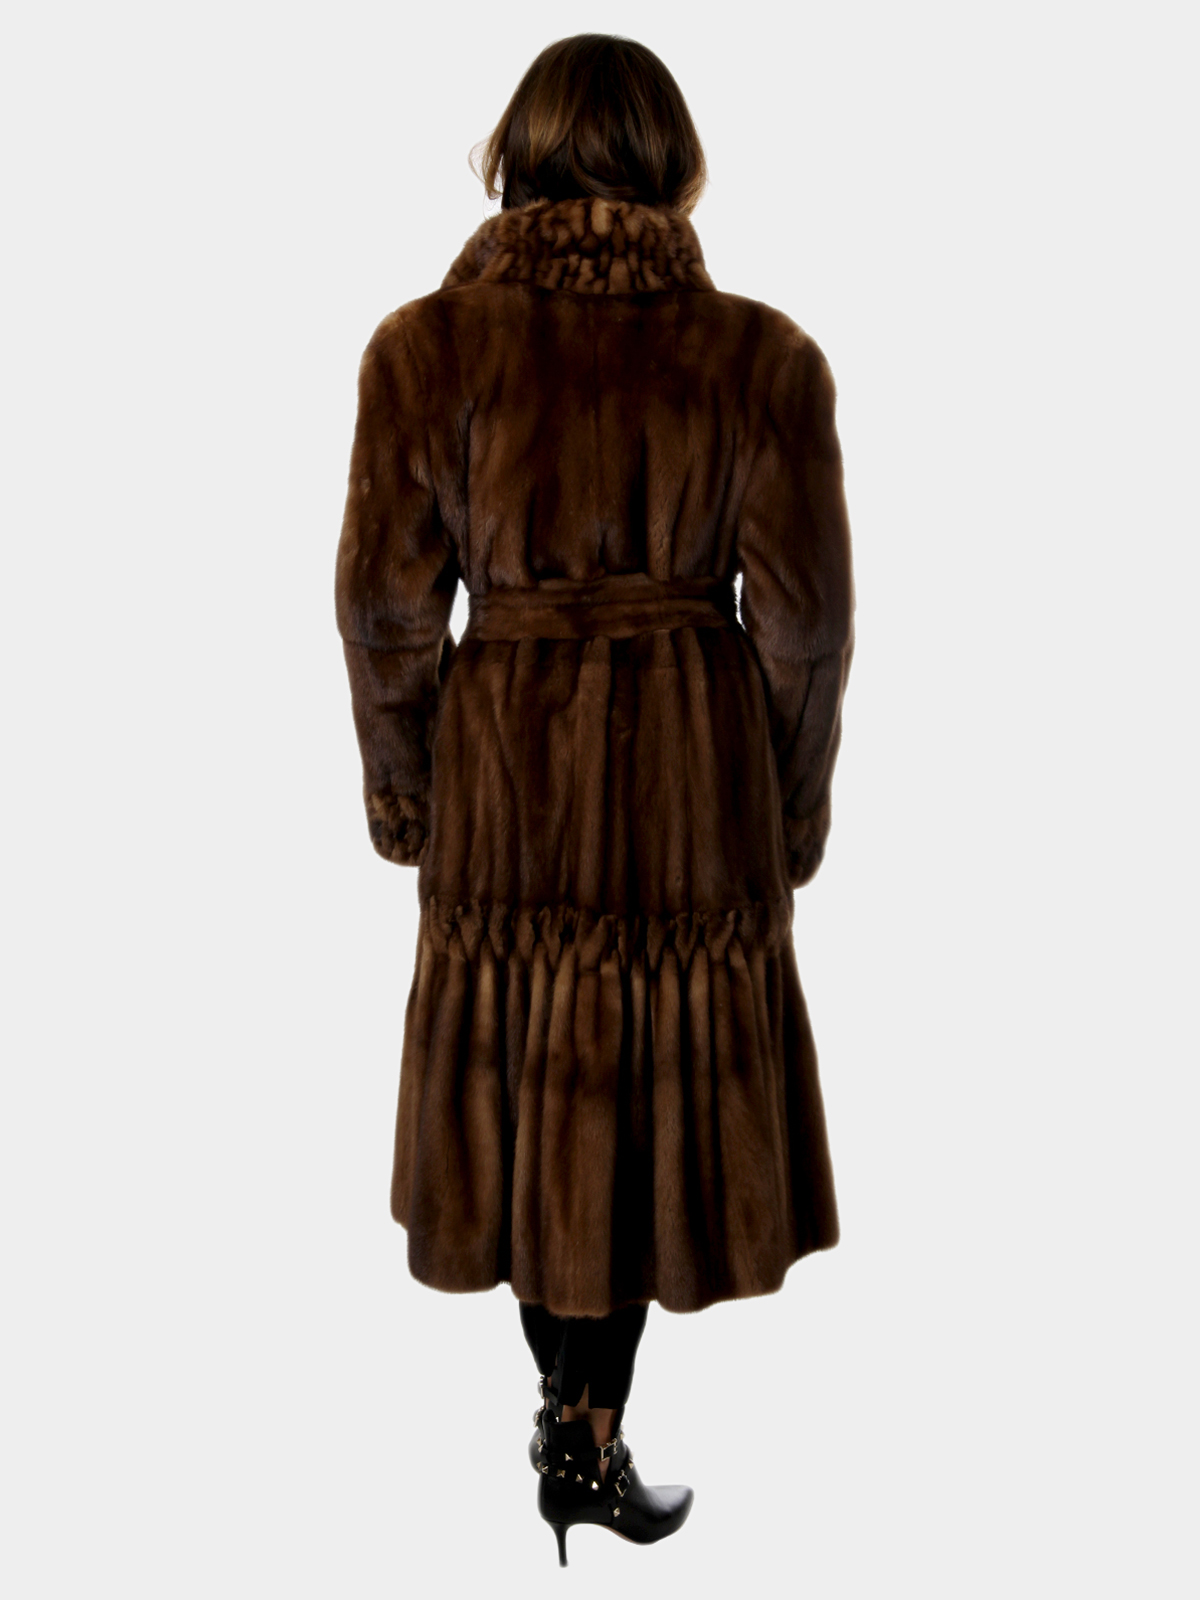 Whiskey Female Mink Fur 78 Coat With Ruching Design Estate Furs 